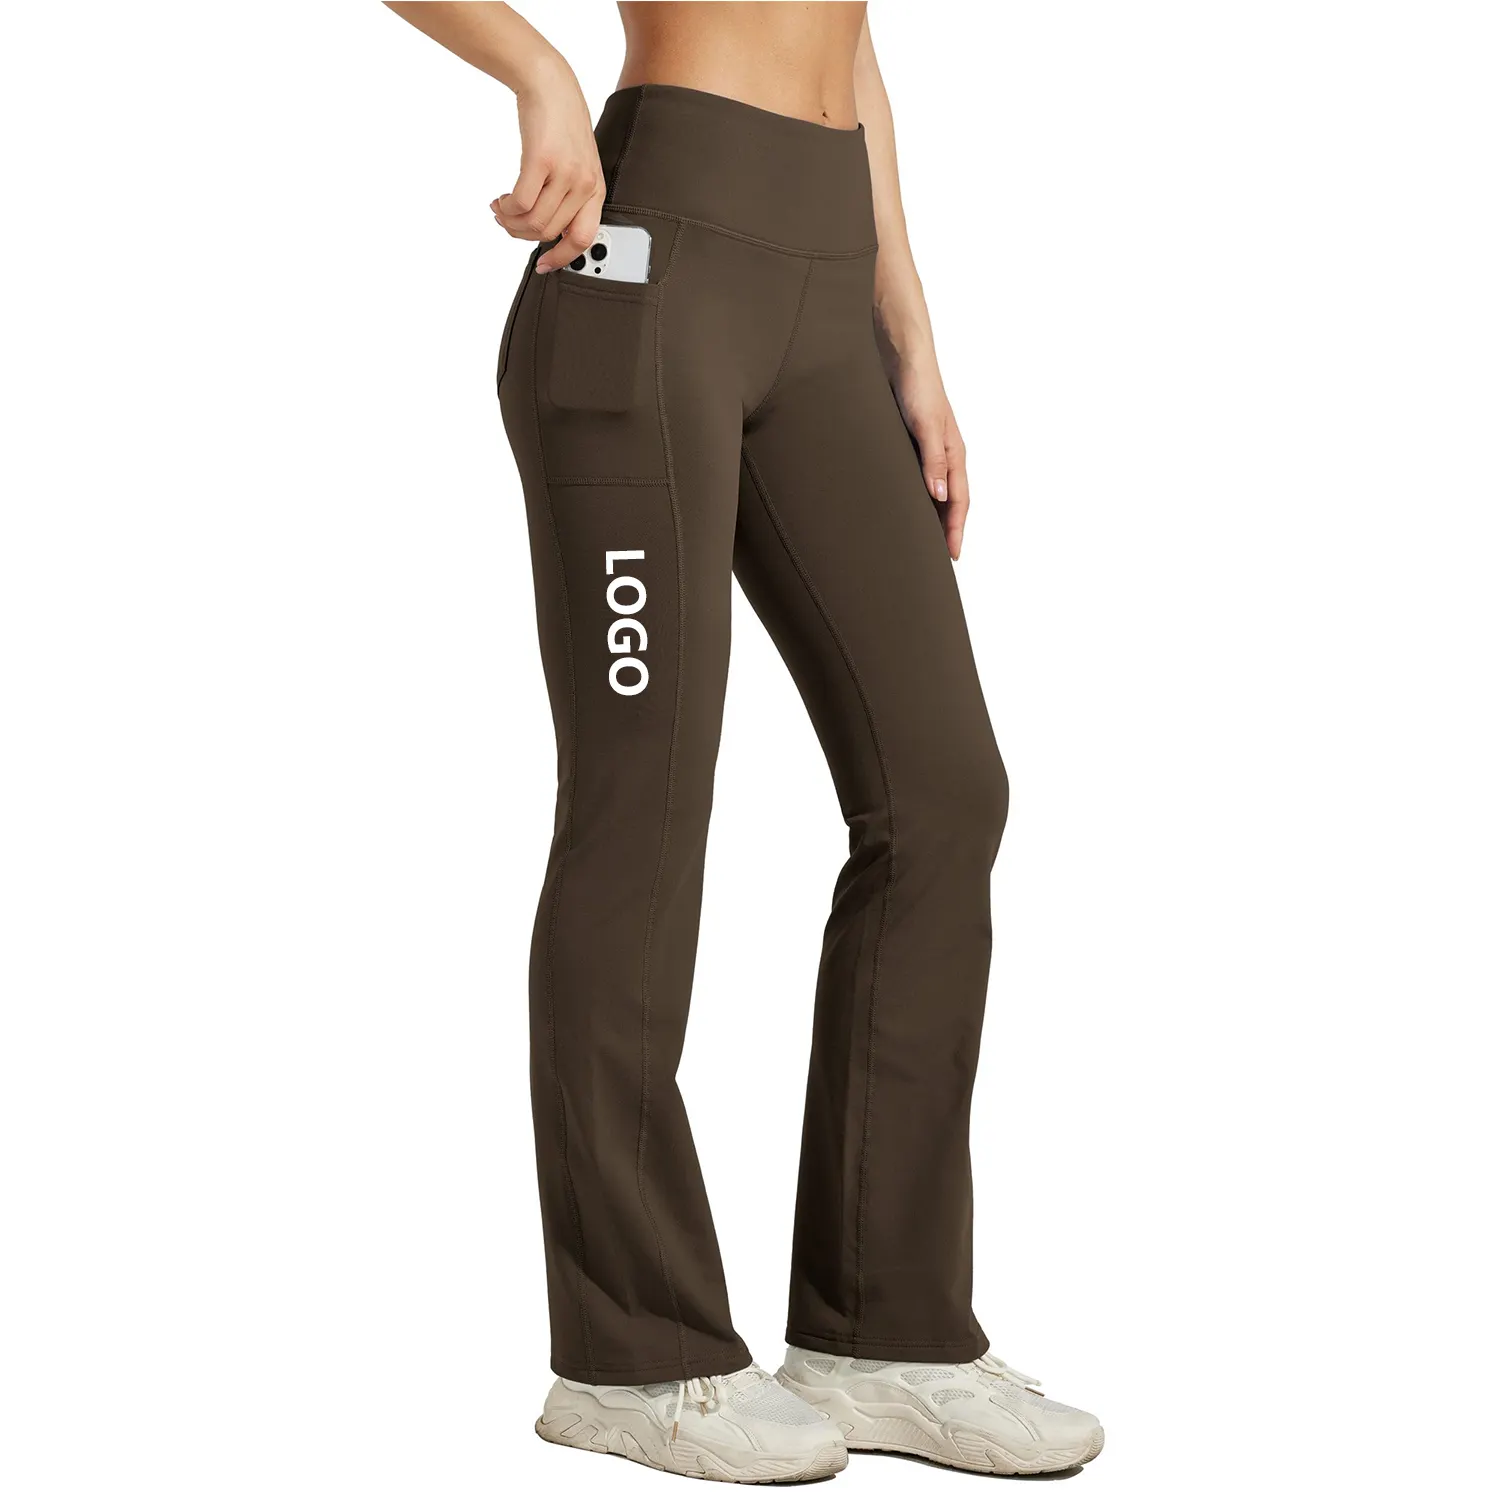 Hot selling winter women's high waist yoga pants polyester spandex tight leggings waterproof bell bottoms for women